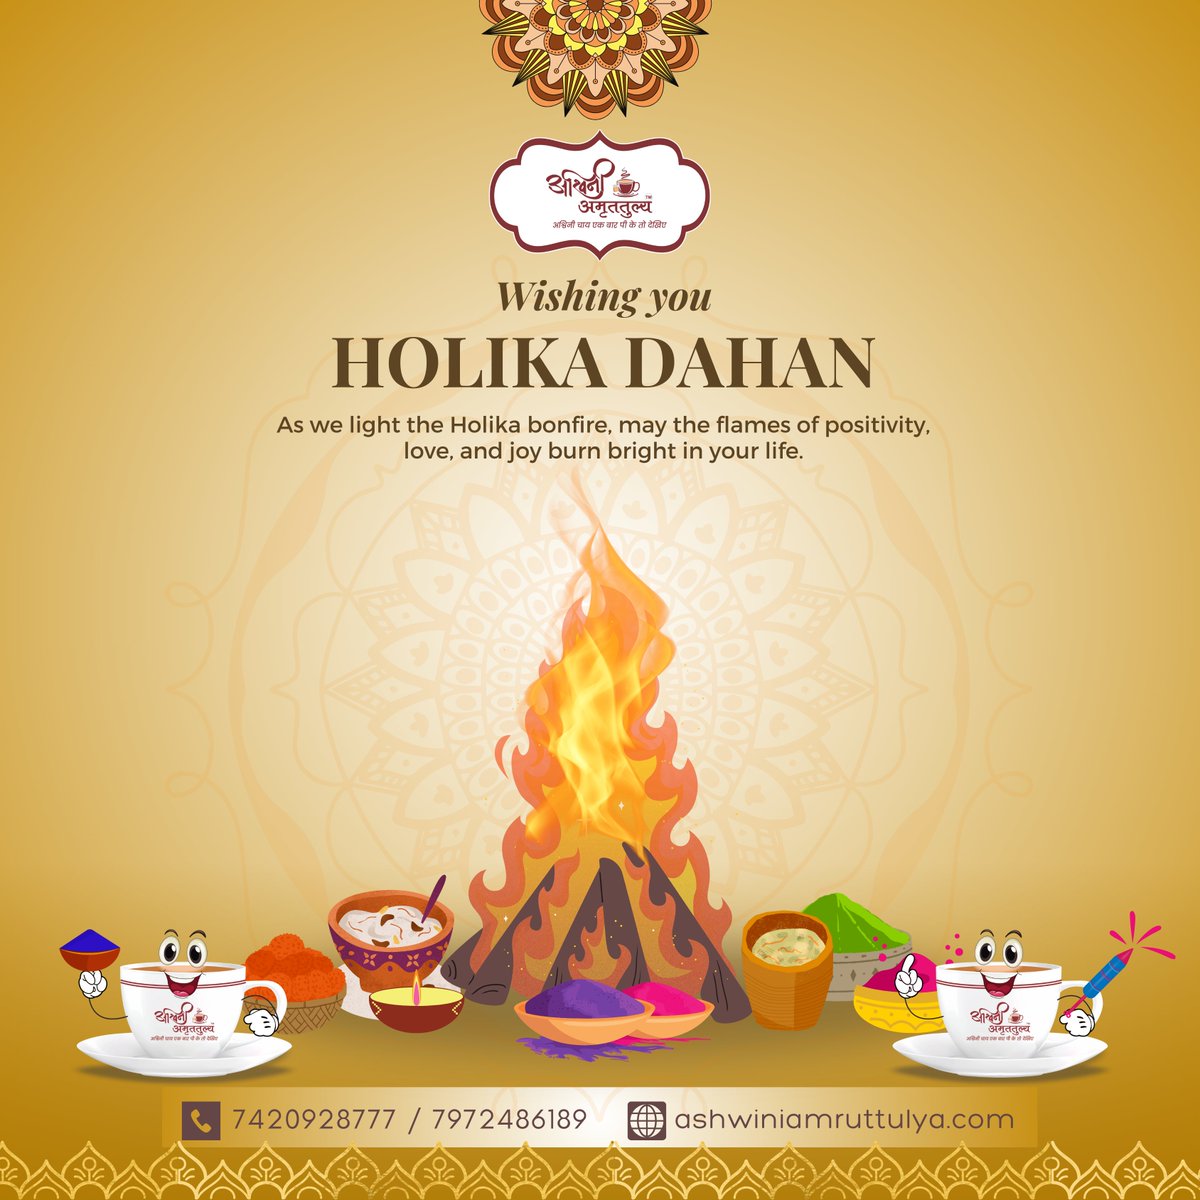 Wishing you Holika Dahan.....❤😇 As we light the Holika bonfire, may the flames of positivity. love, and joy burn bright in your life.....🥰 #AshwiniAmruttulya #holikadahan #happyholi #holikadahan